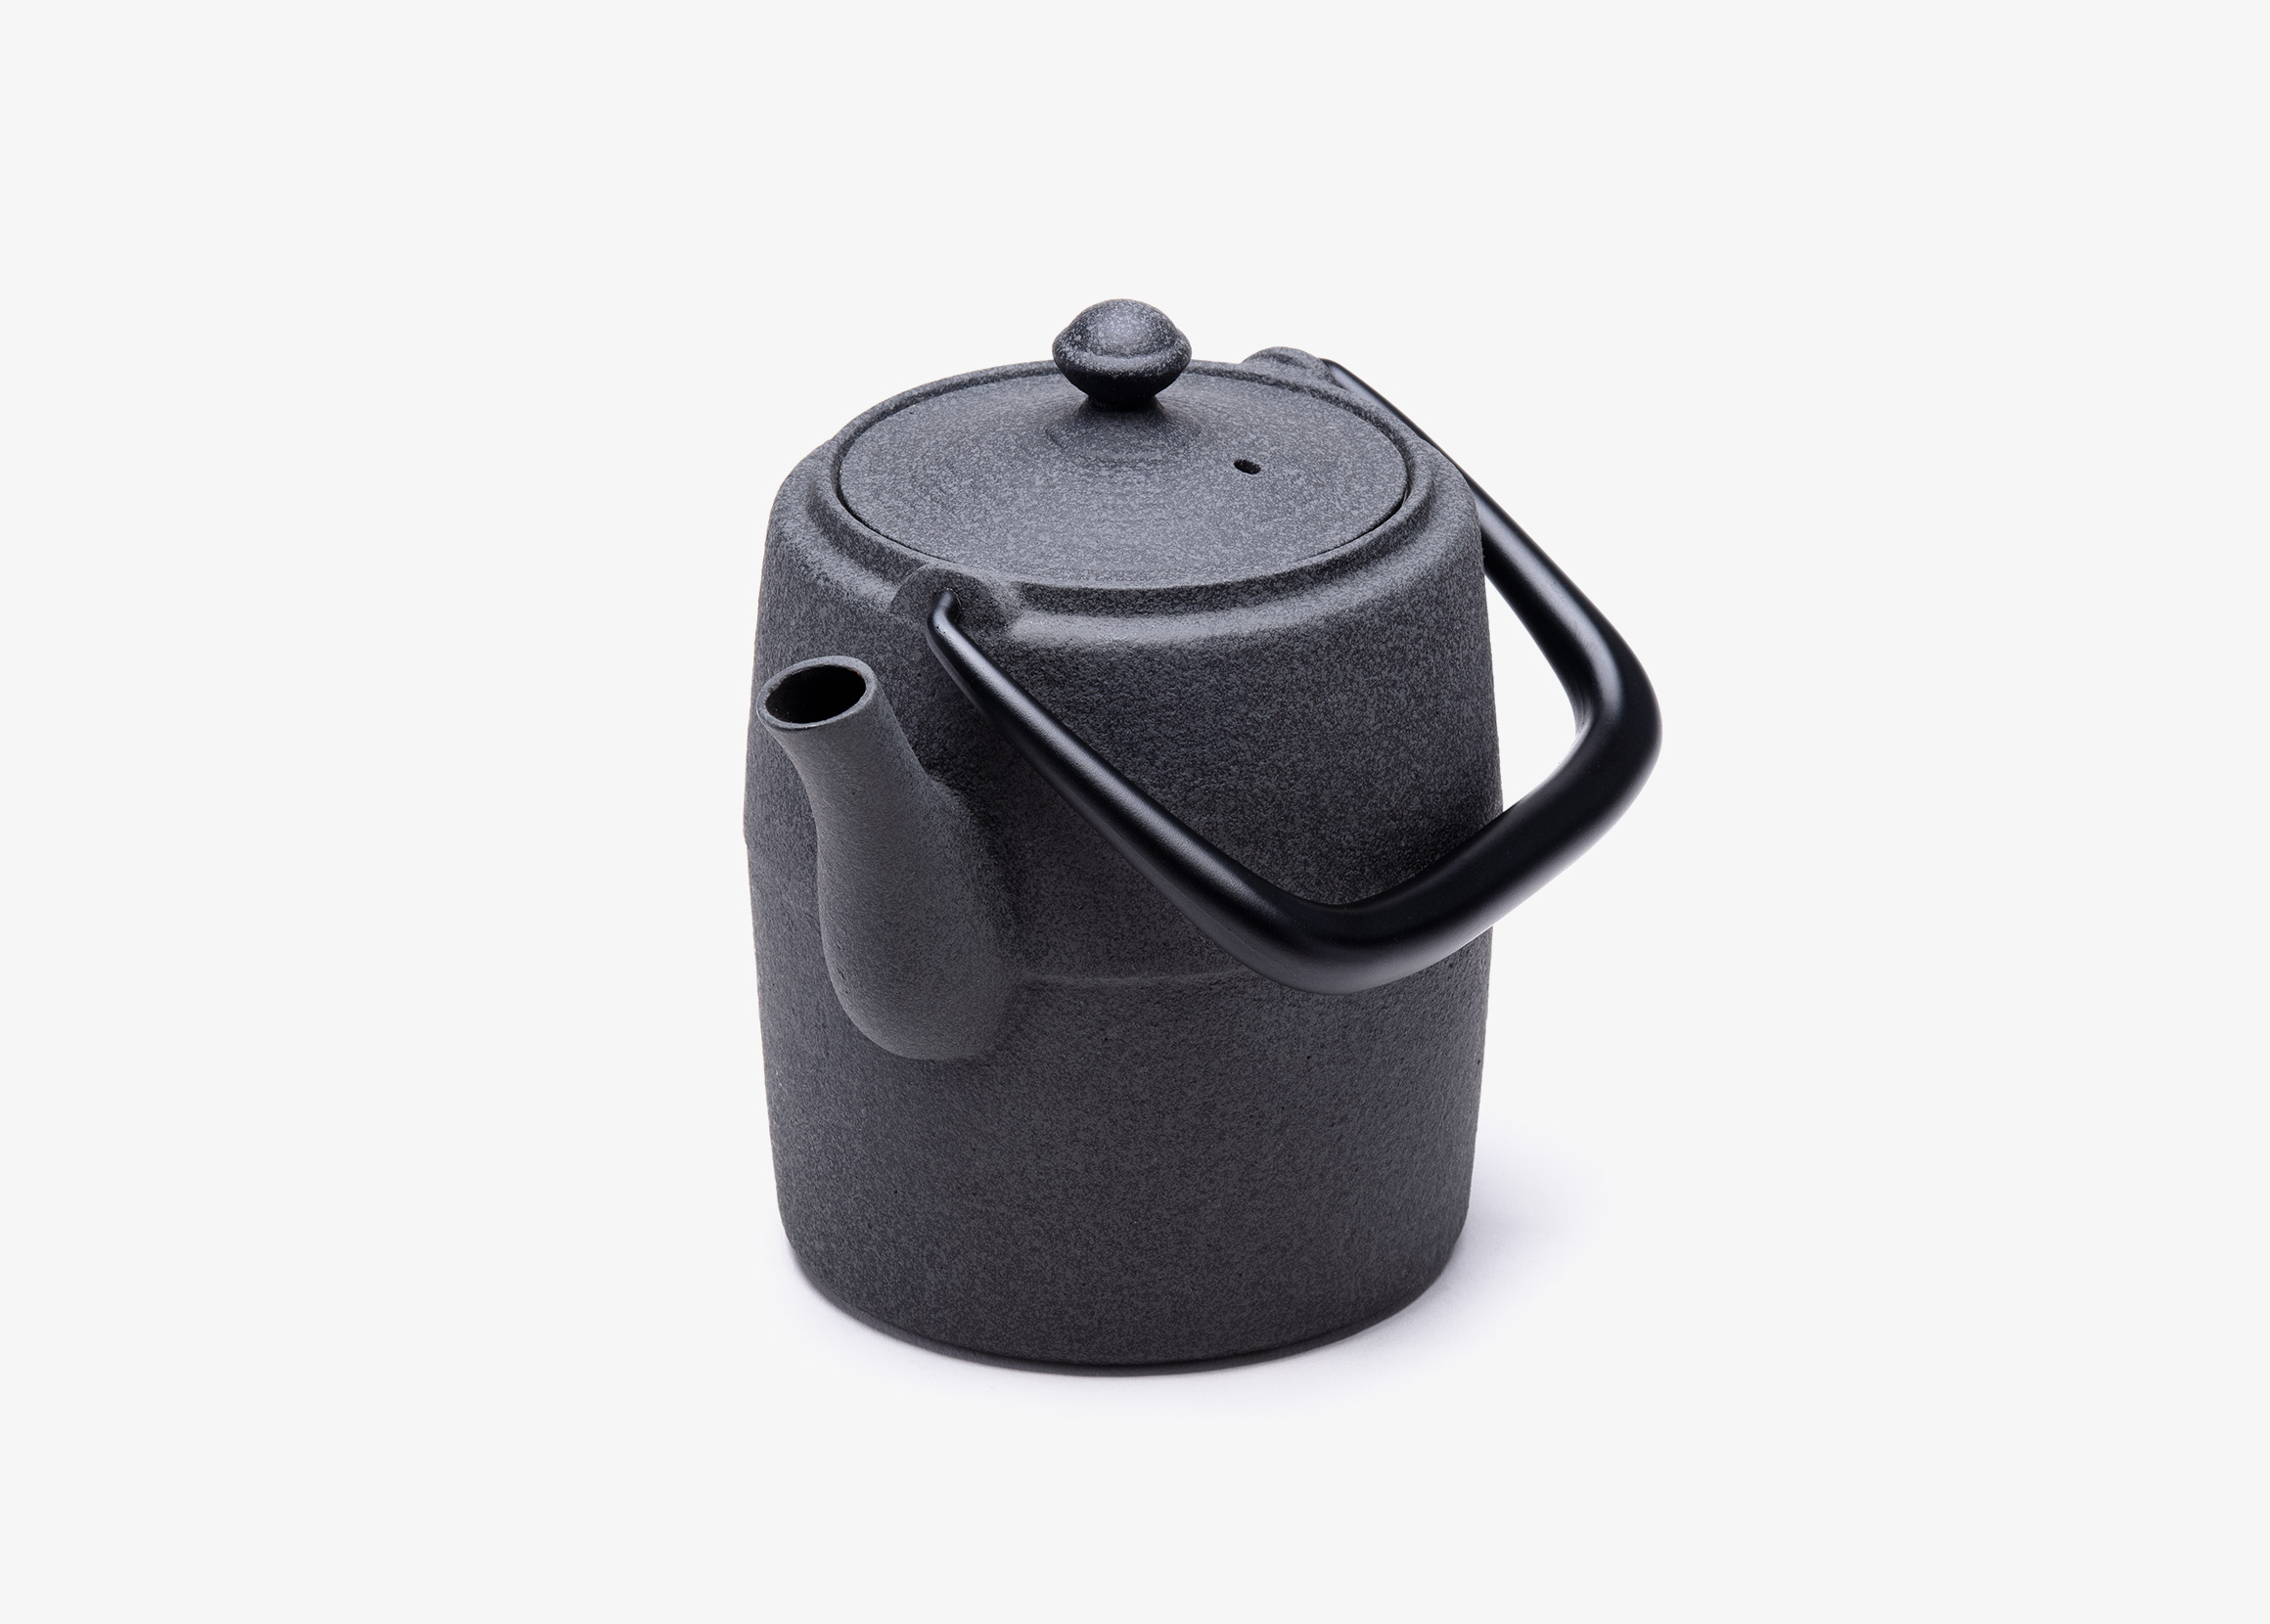 Wabi Cast Iron Teapot From Japan Grey, Cast Iron Tea Warmer